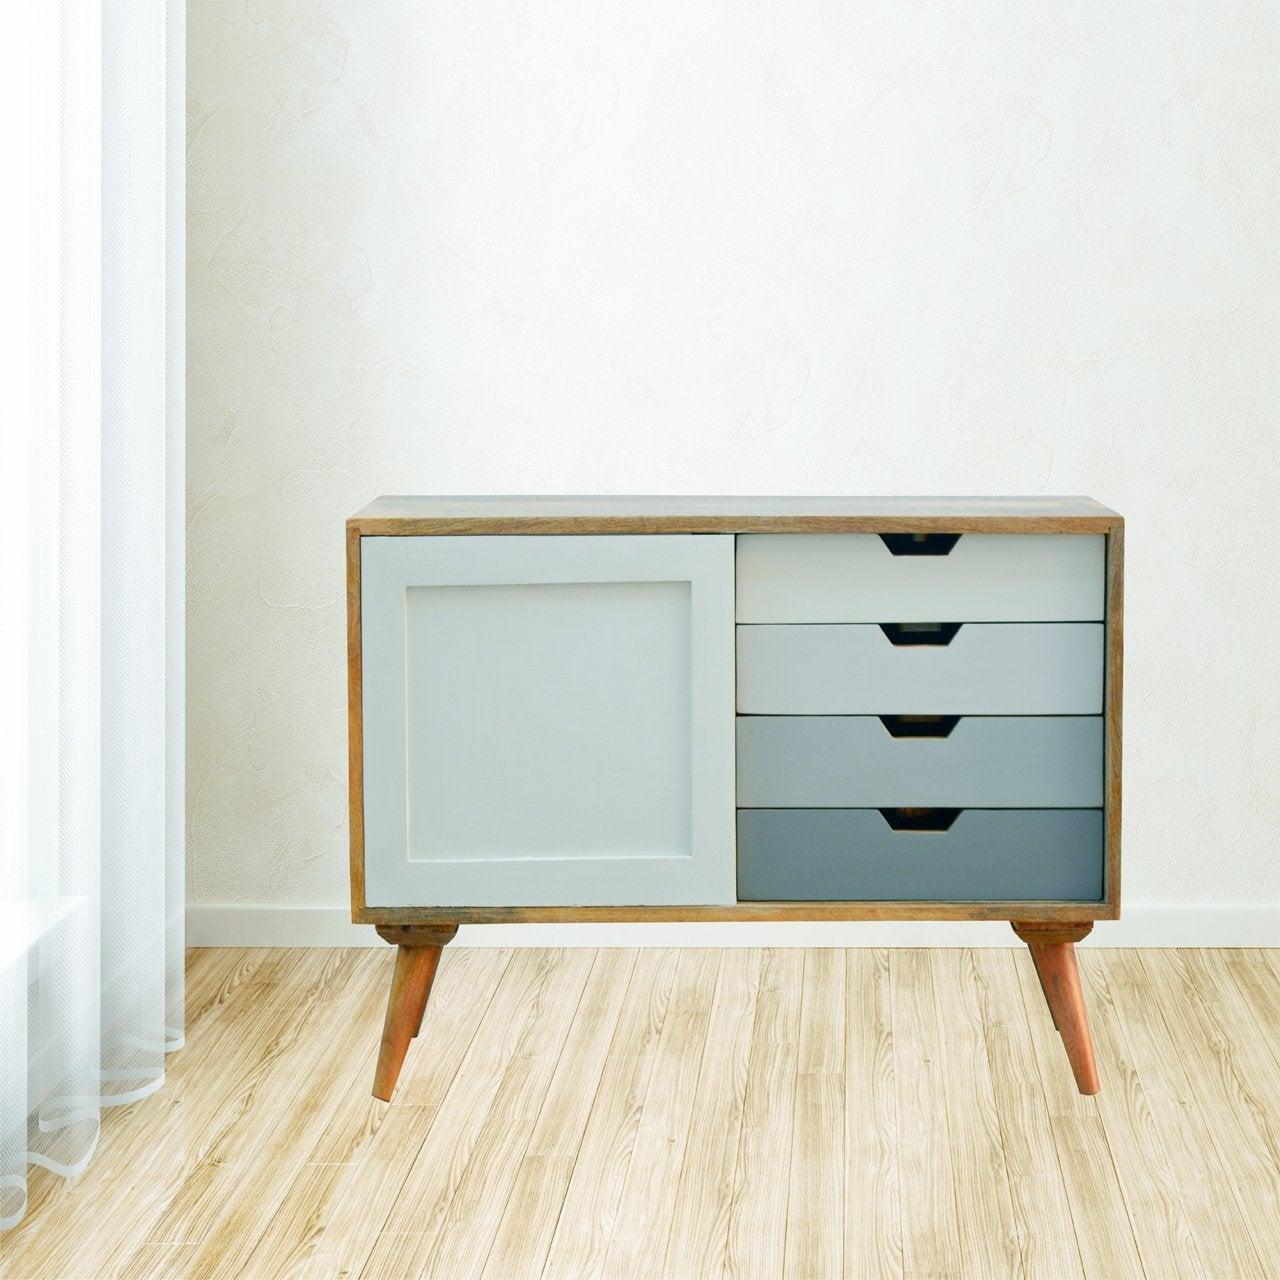 Nordic sliding cabinet with 4 drawers - crimblefest furniture - image 3